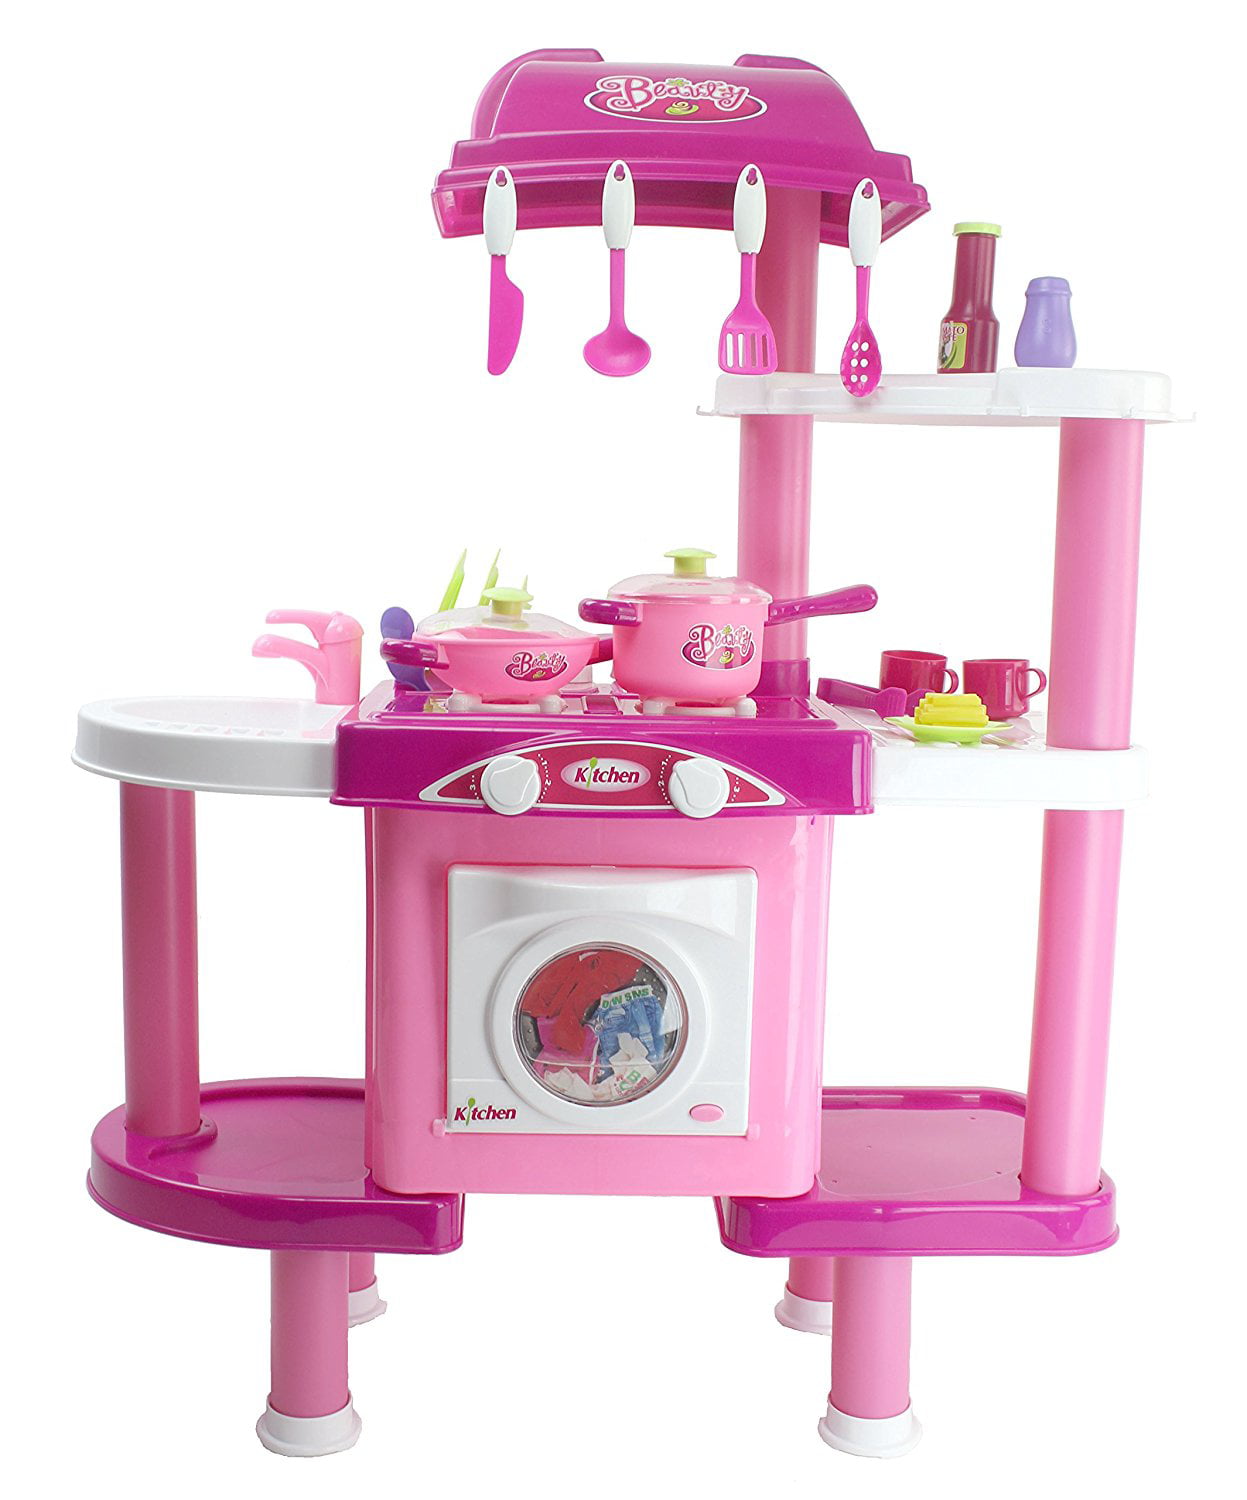  MBVBN Kawaii Digital Scale Kawaii Kitchen Accessories Kawaii  Gifts Pink Kitchen Supplies Cute Kitchen Appliance (Pink) : Home & Kitchen